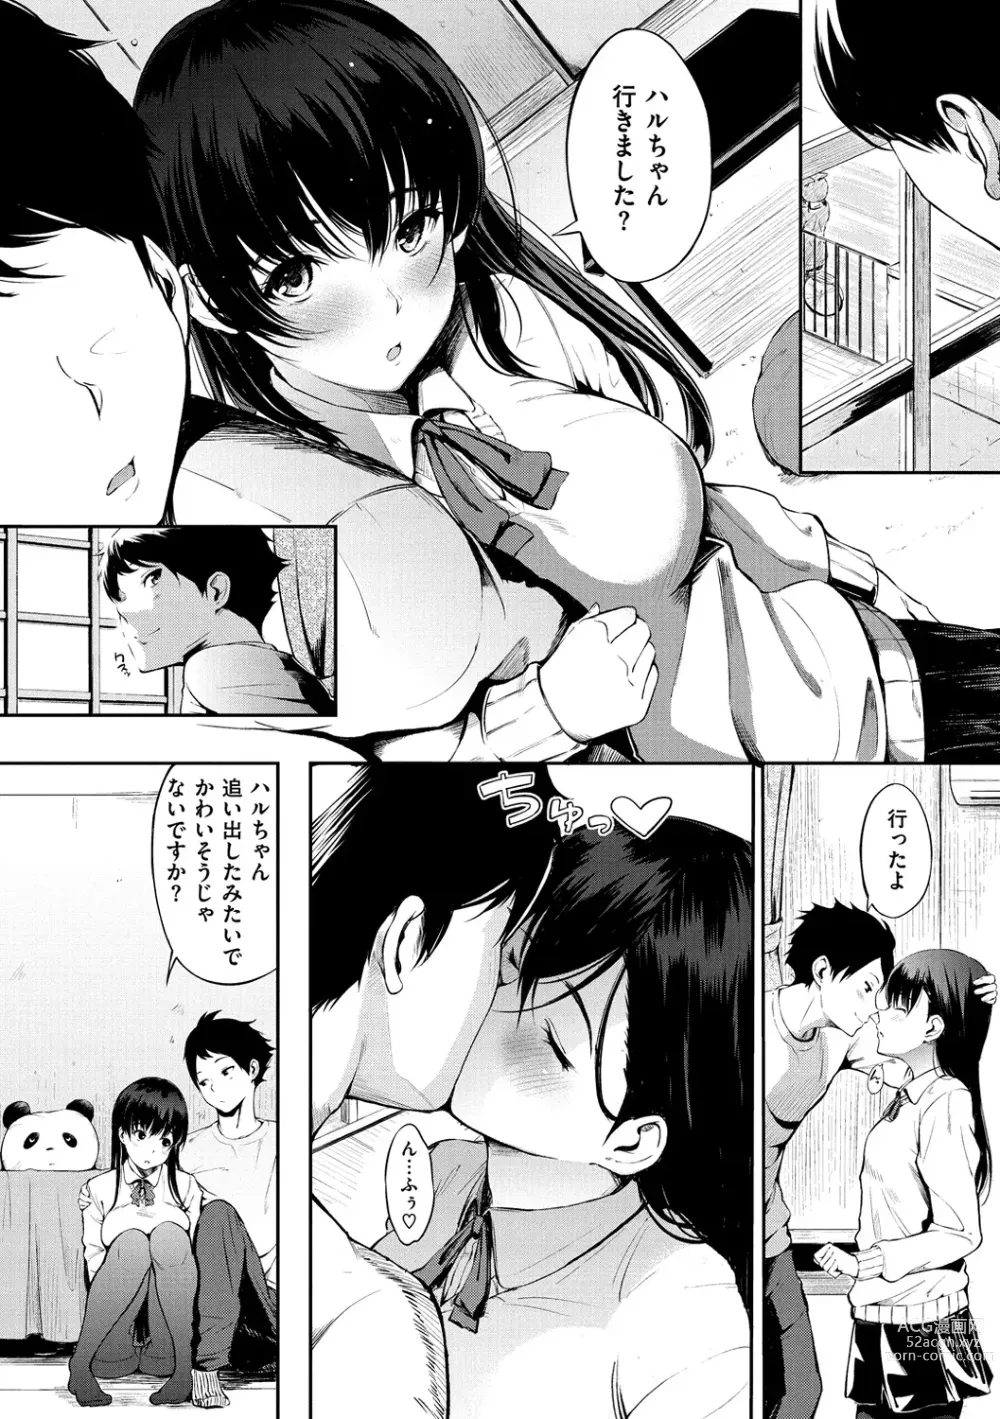 Page 15 of manga Oyatsu no Jikan + 8P Leaflet